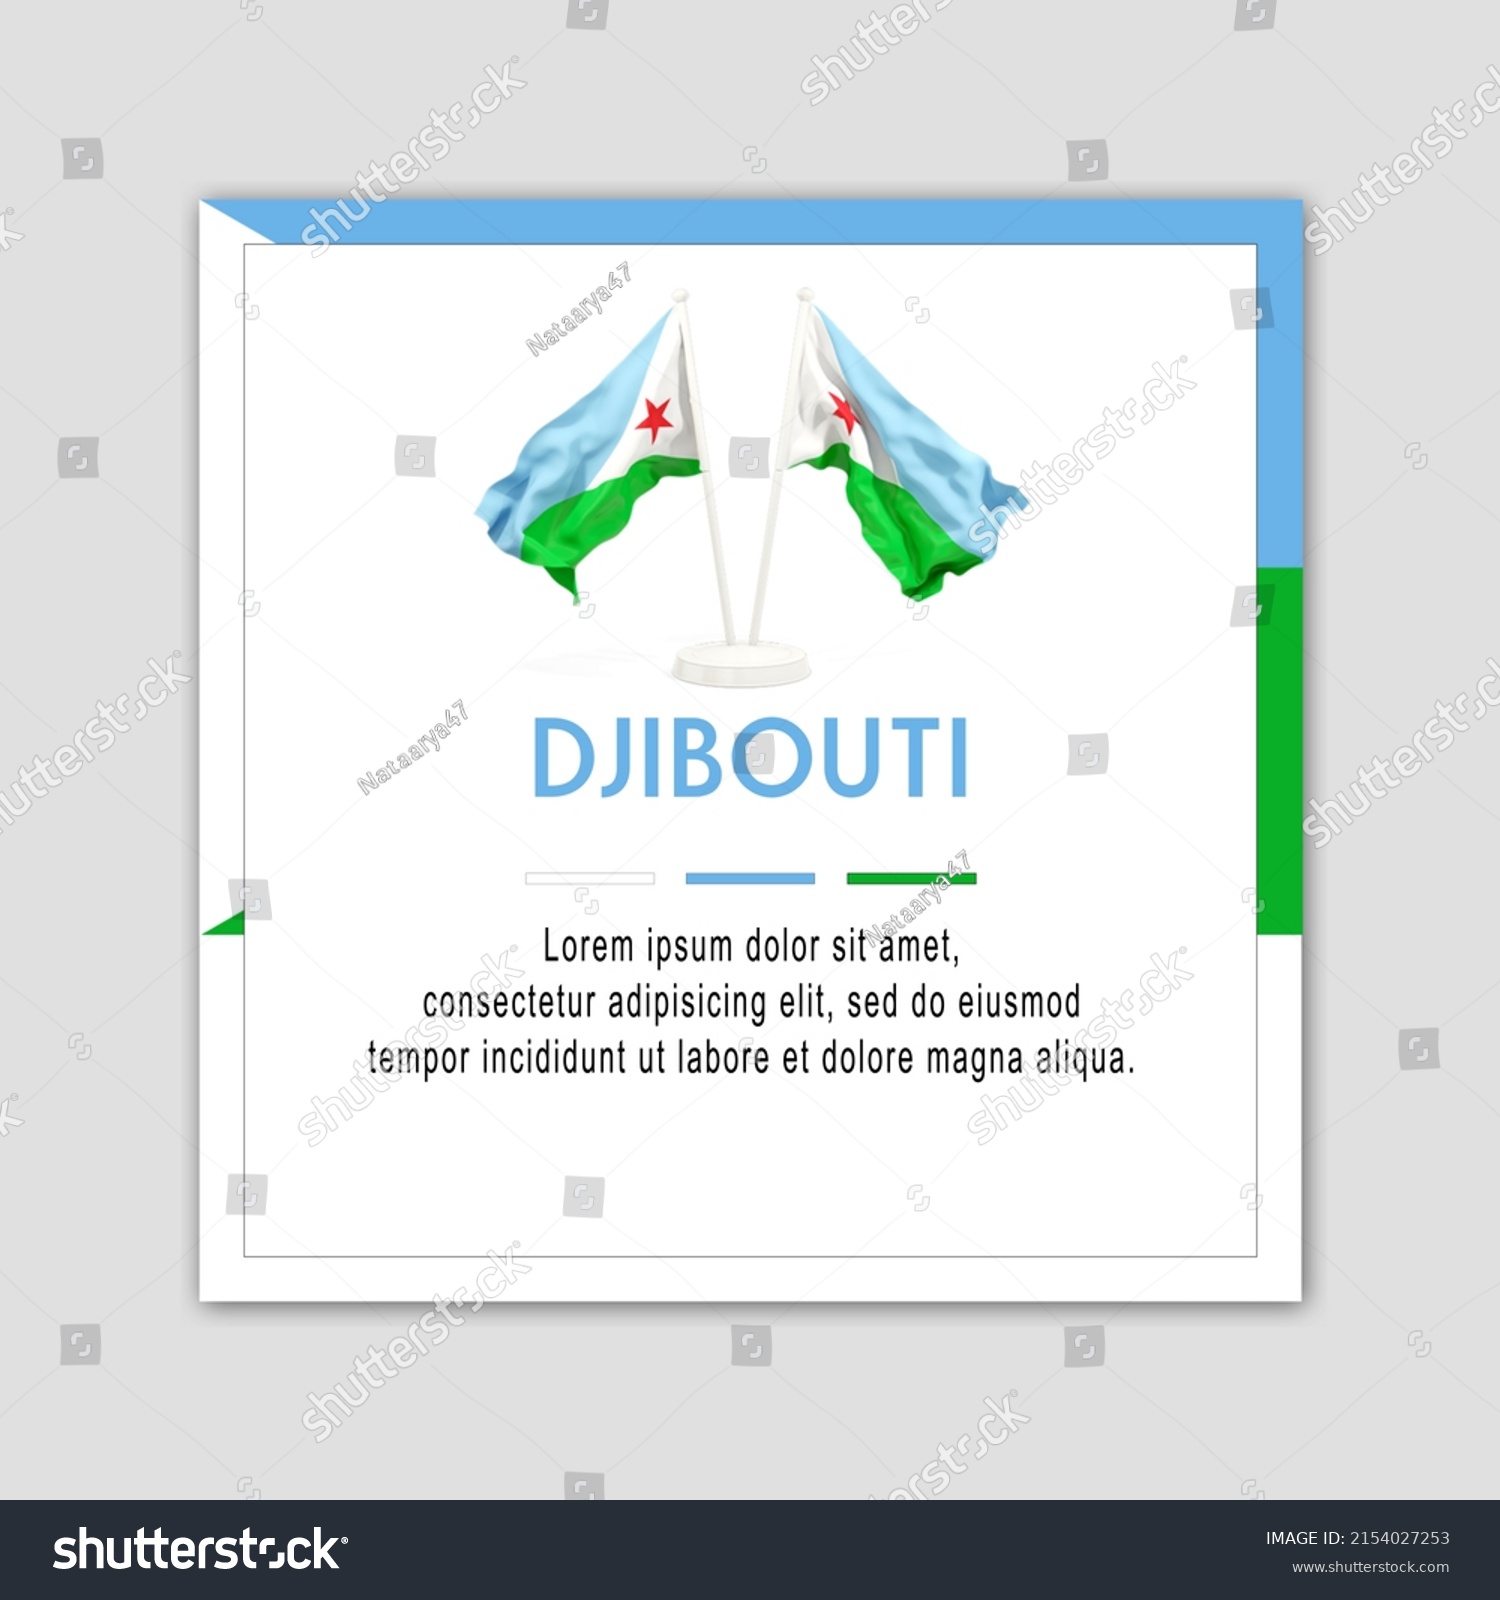 SVG of Illustration of Djibouti National Day celebration, with Djiboutian flagpole. svg